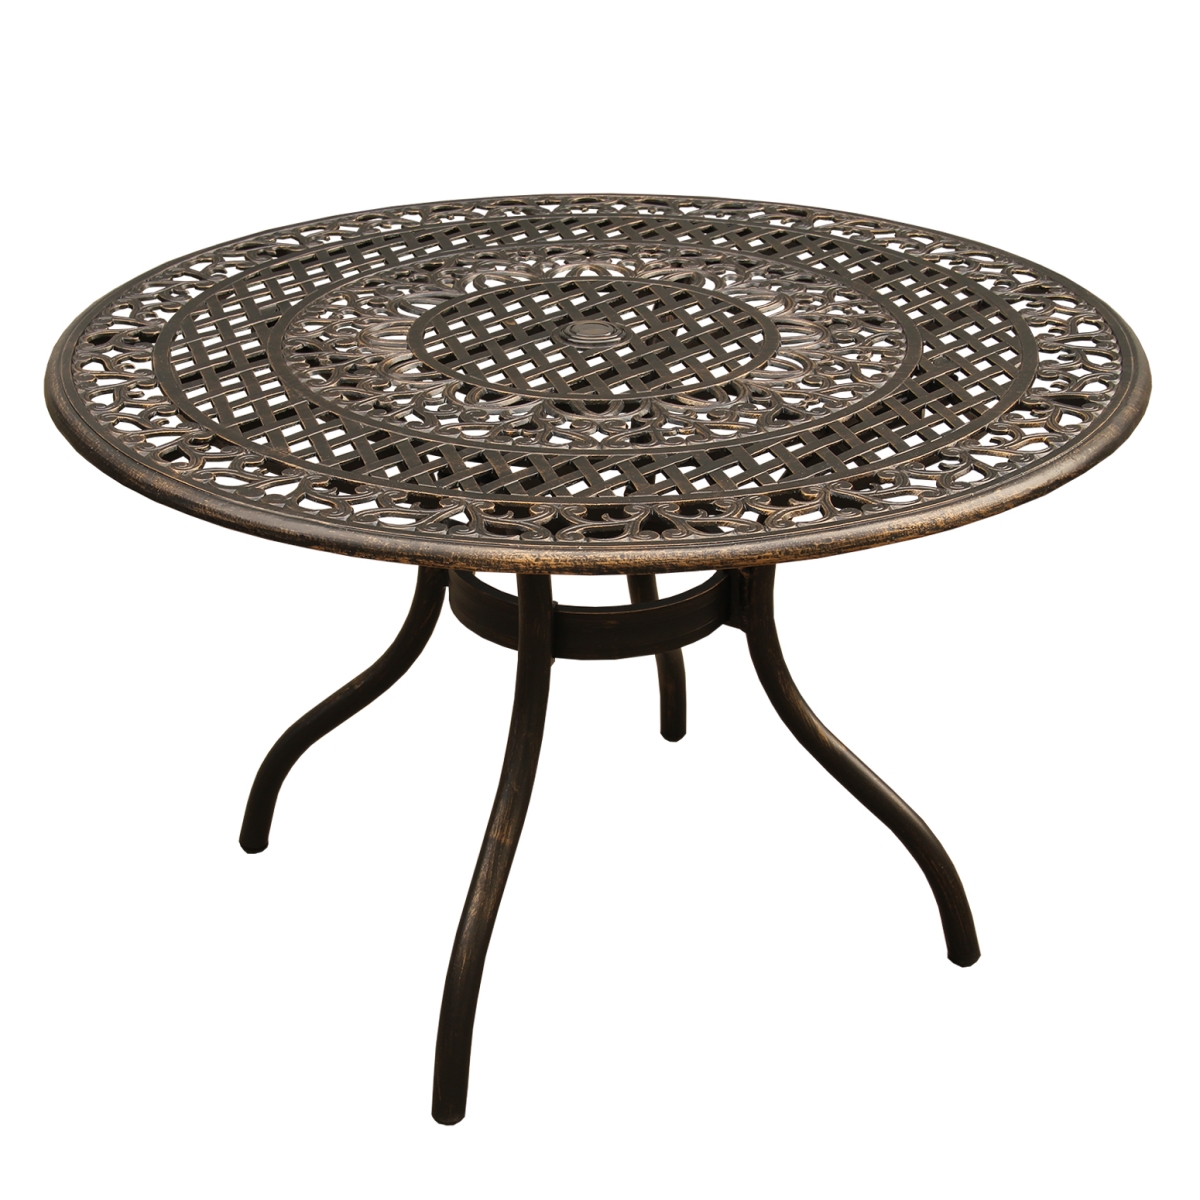 48 in. Ornate Traditional Outdoor Mesh Lattice Aluminium Round Dining Table, Bronze -  Convenience Concepts, HI3118704